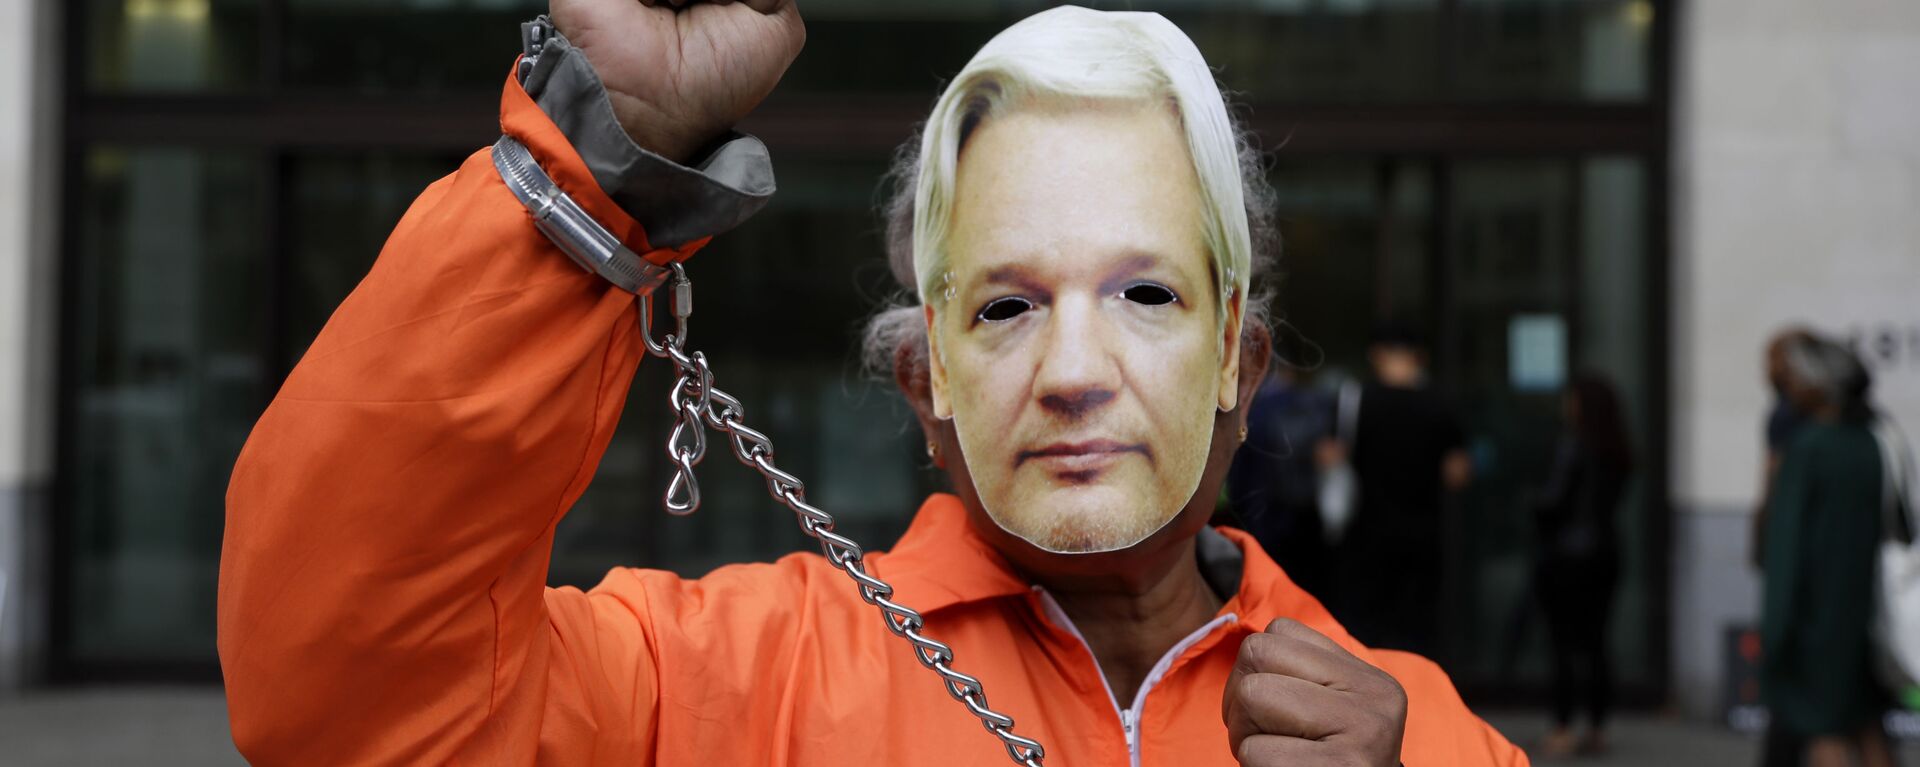 Un manifestante por la liberación del fundador de Wikileaks, Julian Assange - Sputnik Mundo, 1920, 16.09.2020